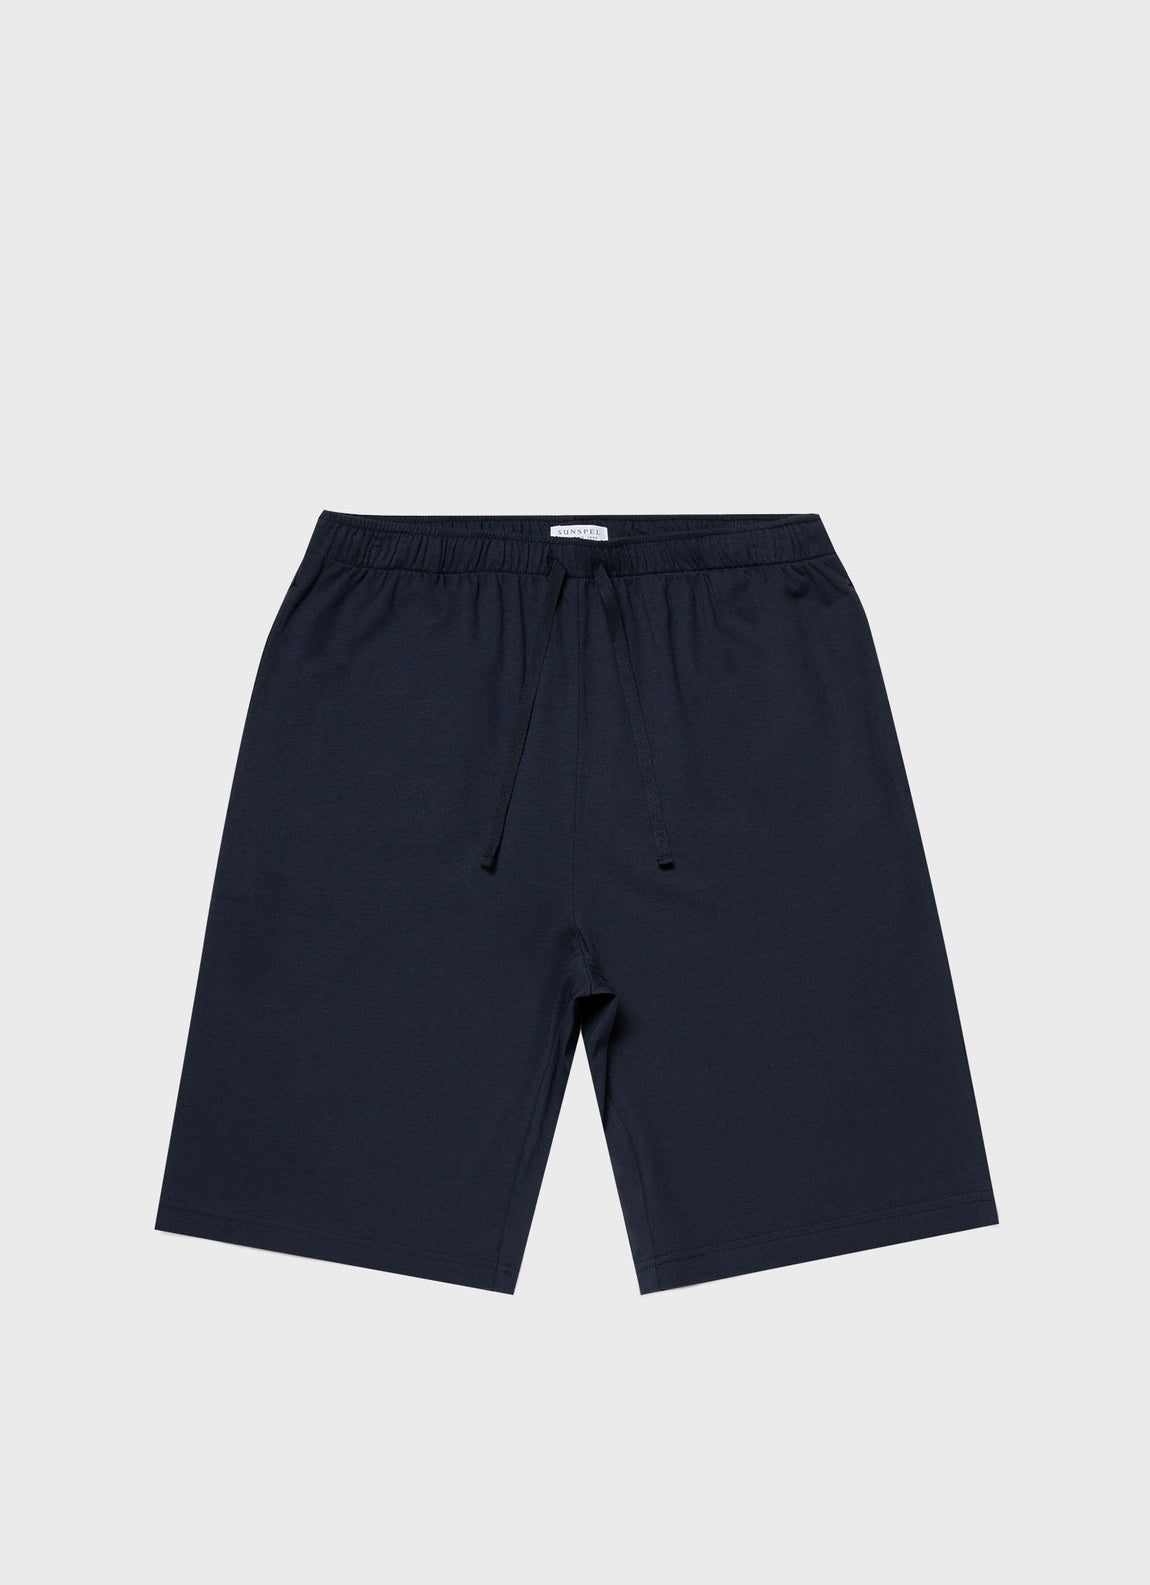 Men's Cotton Modal Lounge Shorts in Navy | Sunspel